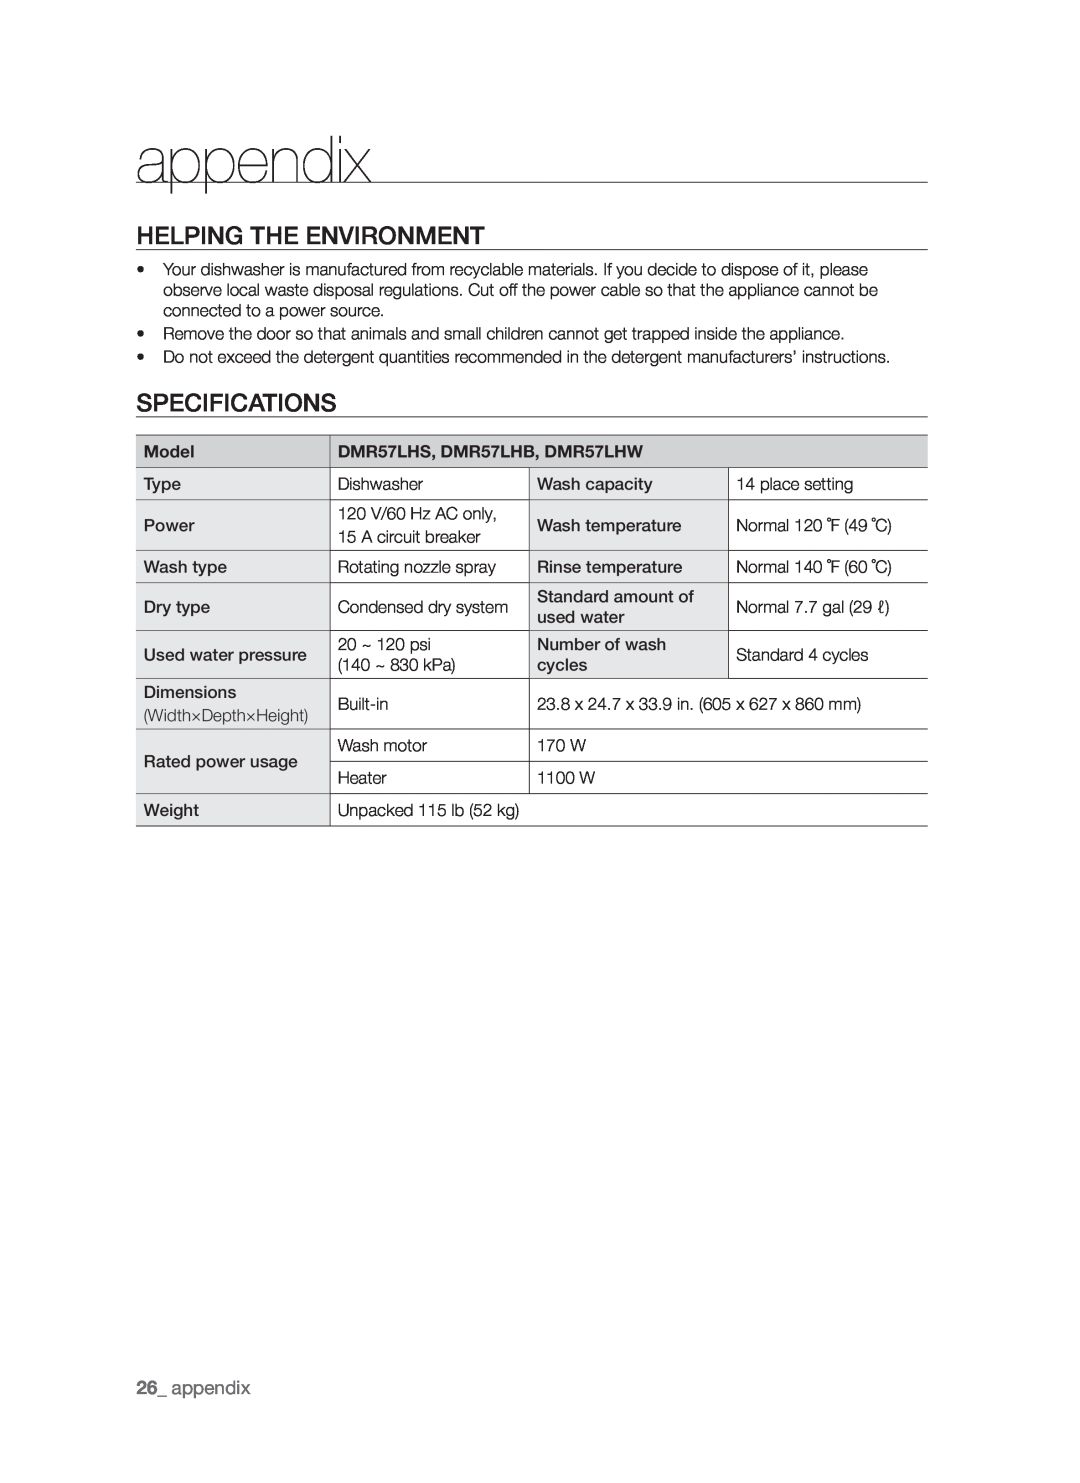 Samsung user manual appendix, Helping the environment, Specifications, Model, DMR57LHS, DMR57LHB, DMR57LHW 